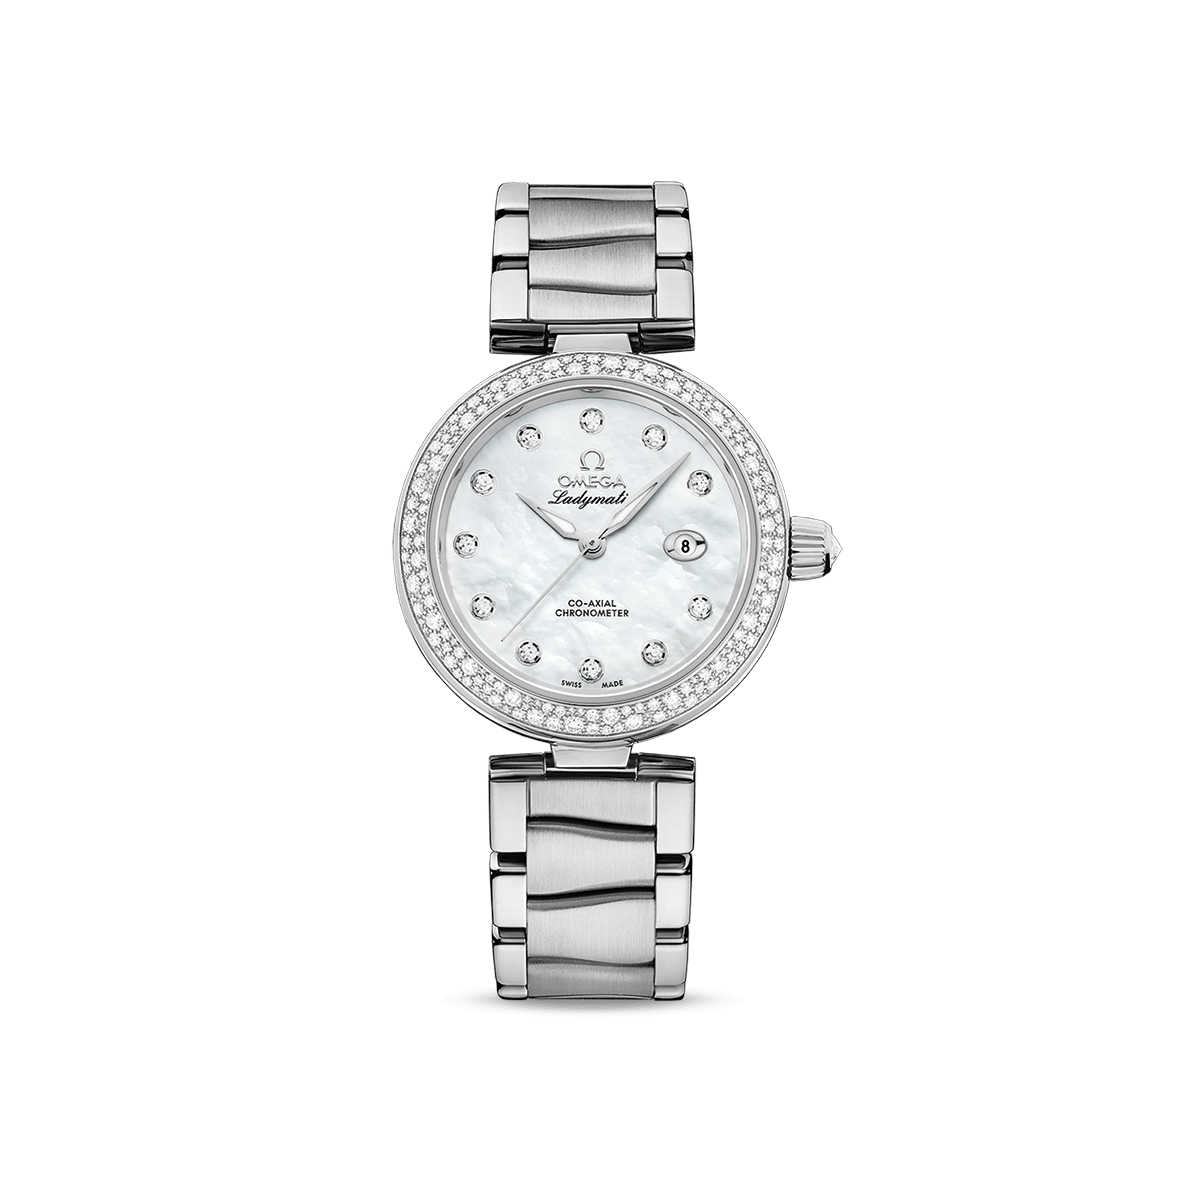 OMEGA De Ville Ladymatic Diamond Co-axial 34mm Watch - 425.35.34.20.55.002